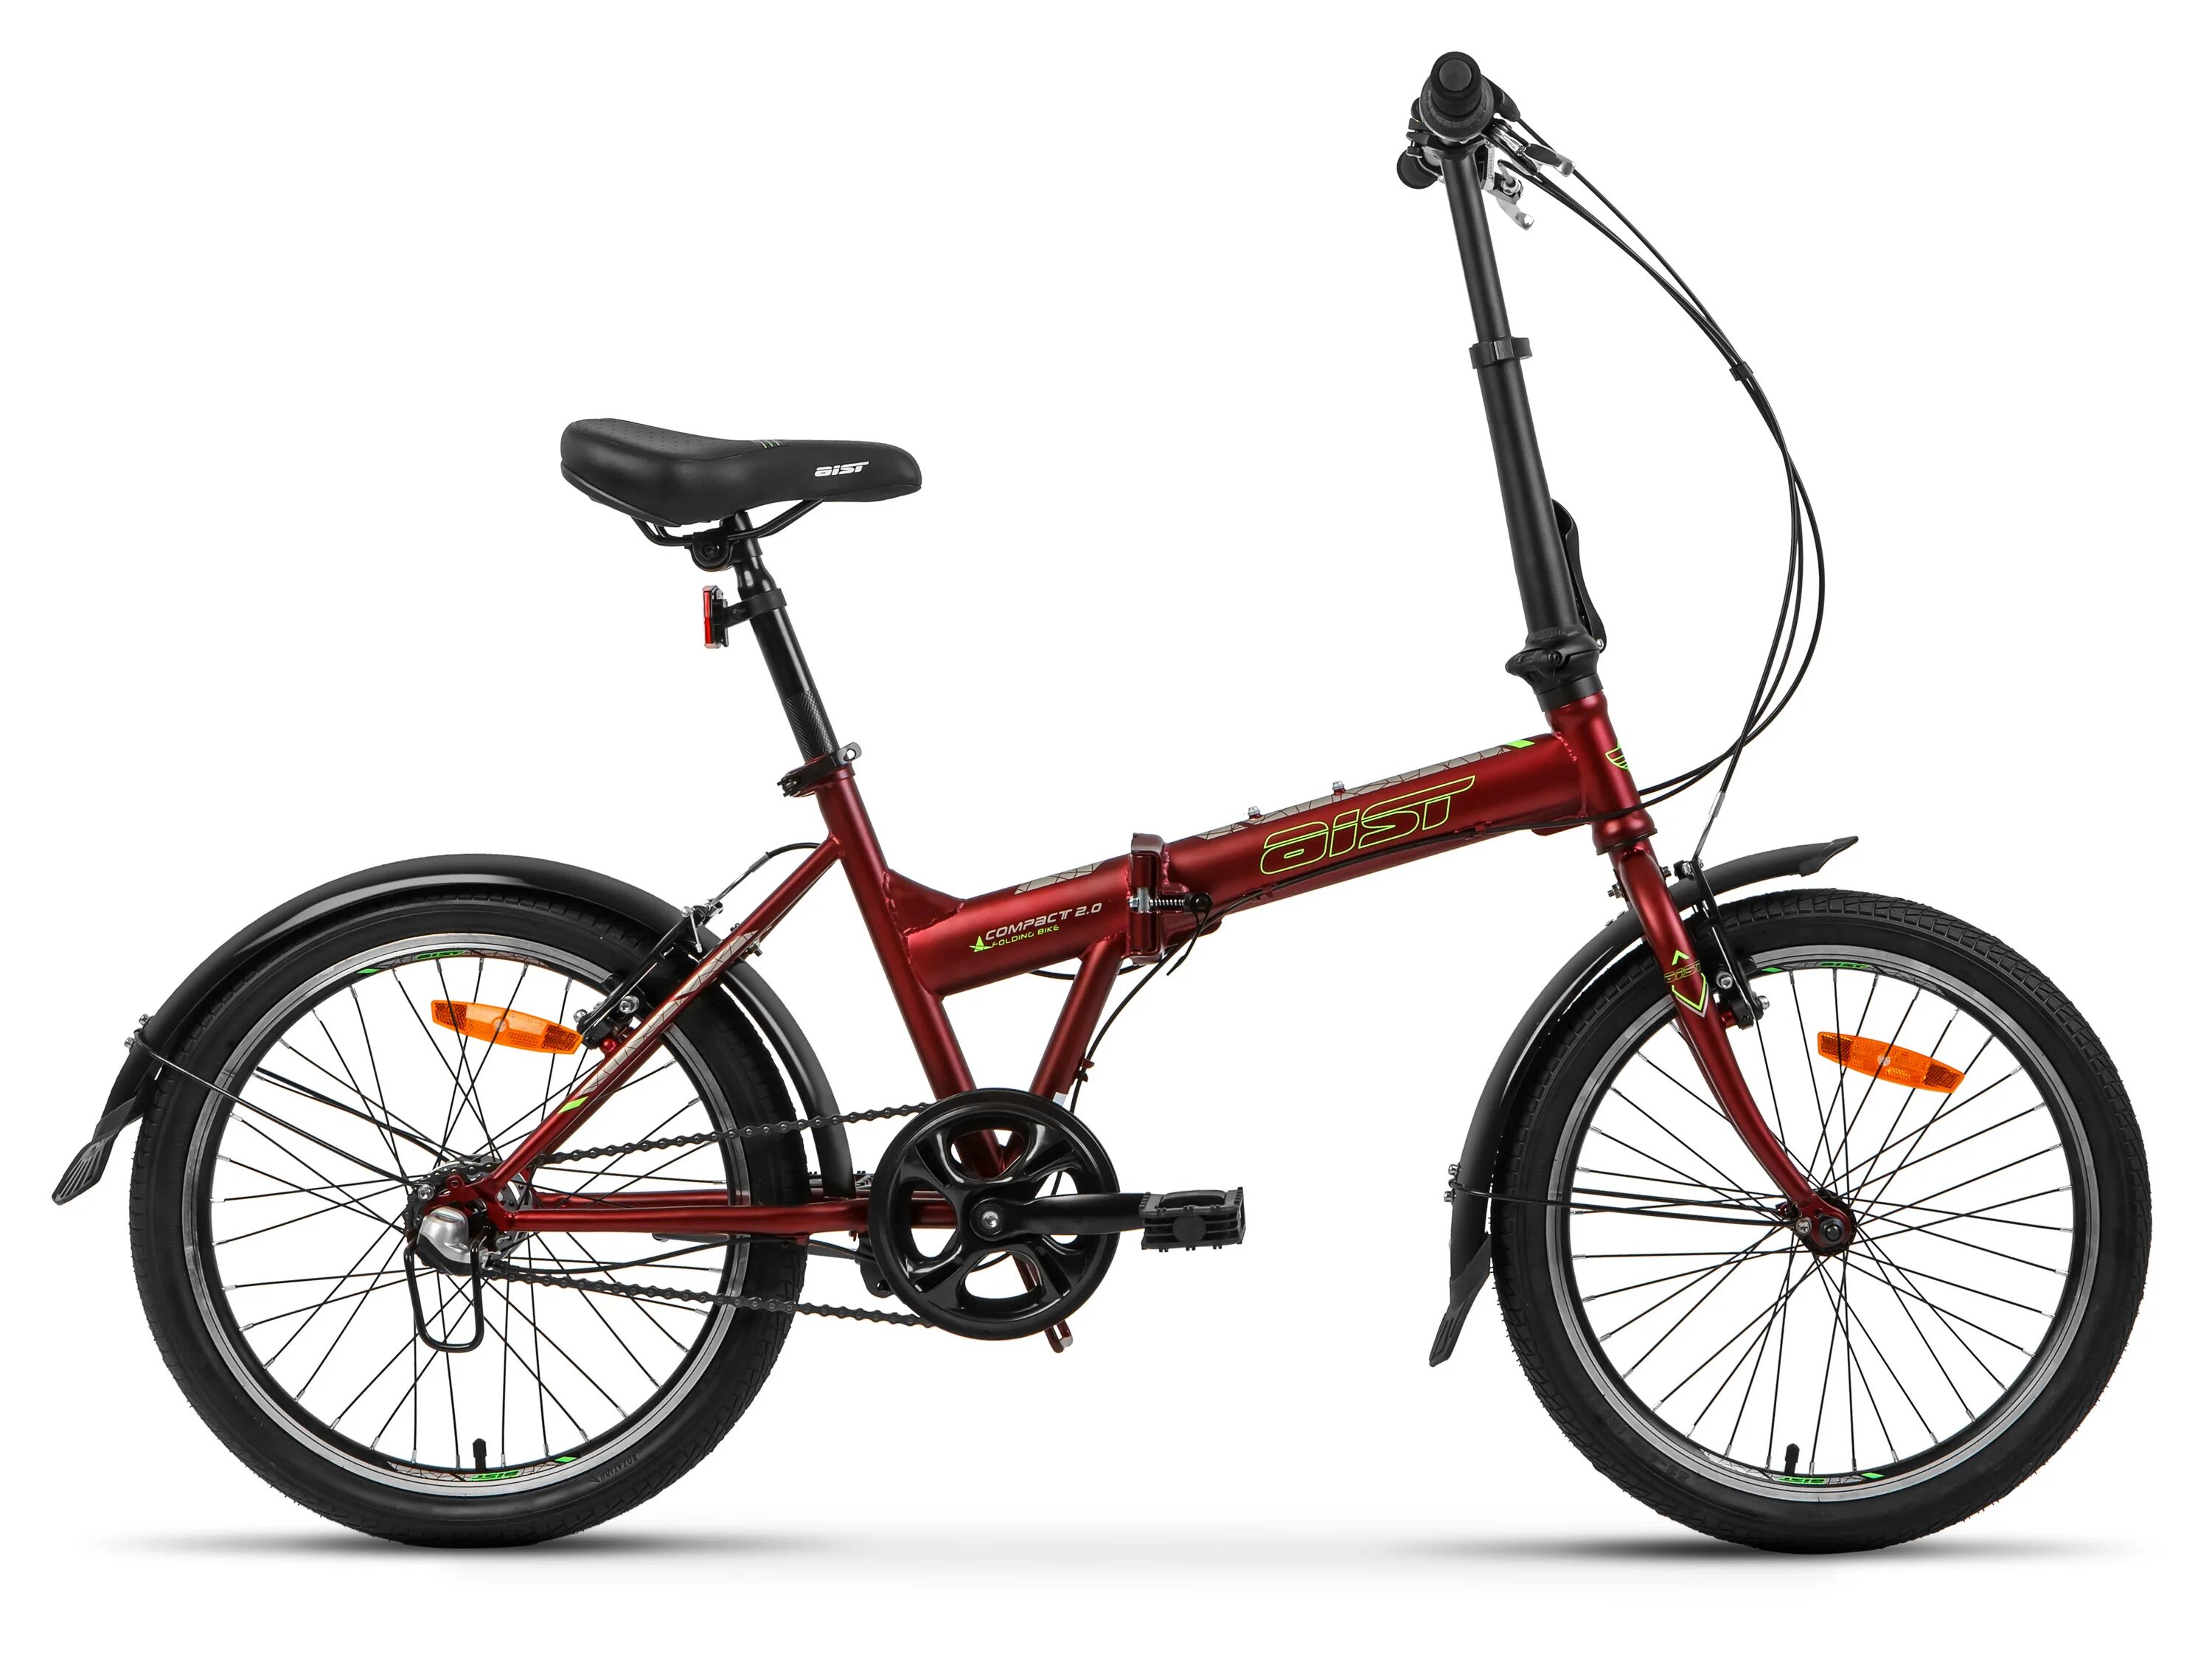 Aist Compact 2.0. Городской велосипед Аист Compact 2.0. Складной велосипед Аист Compact 1.0, 20, 2021. Aist Compact 2.0 2021.